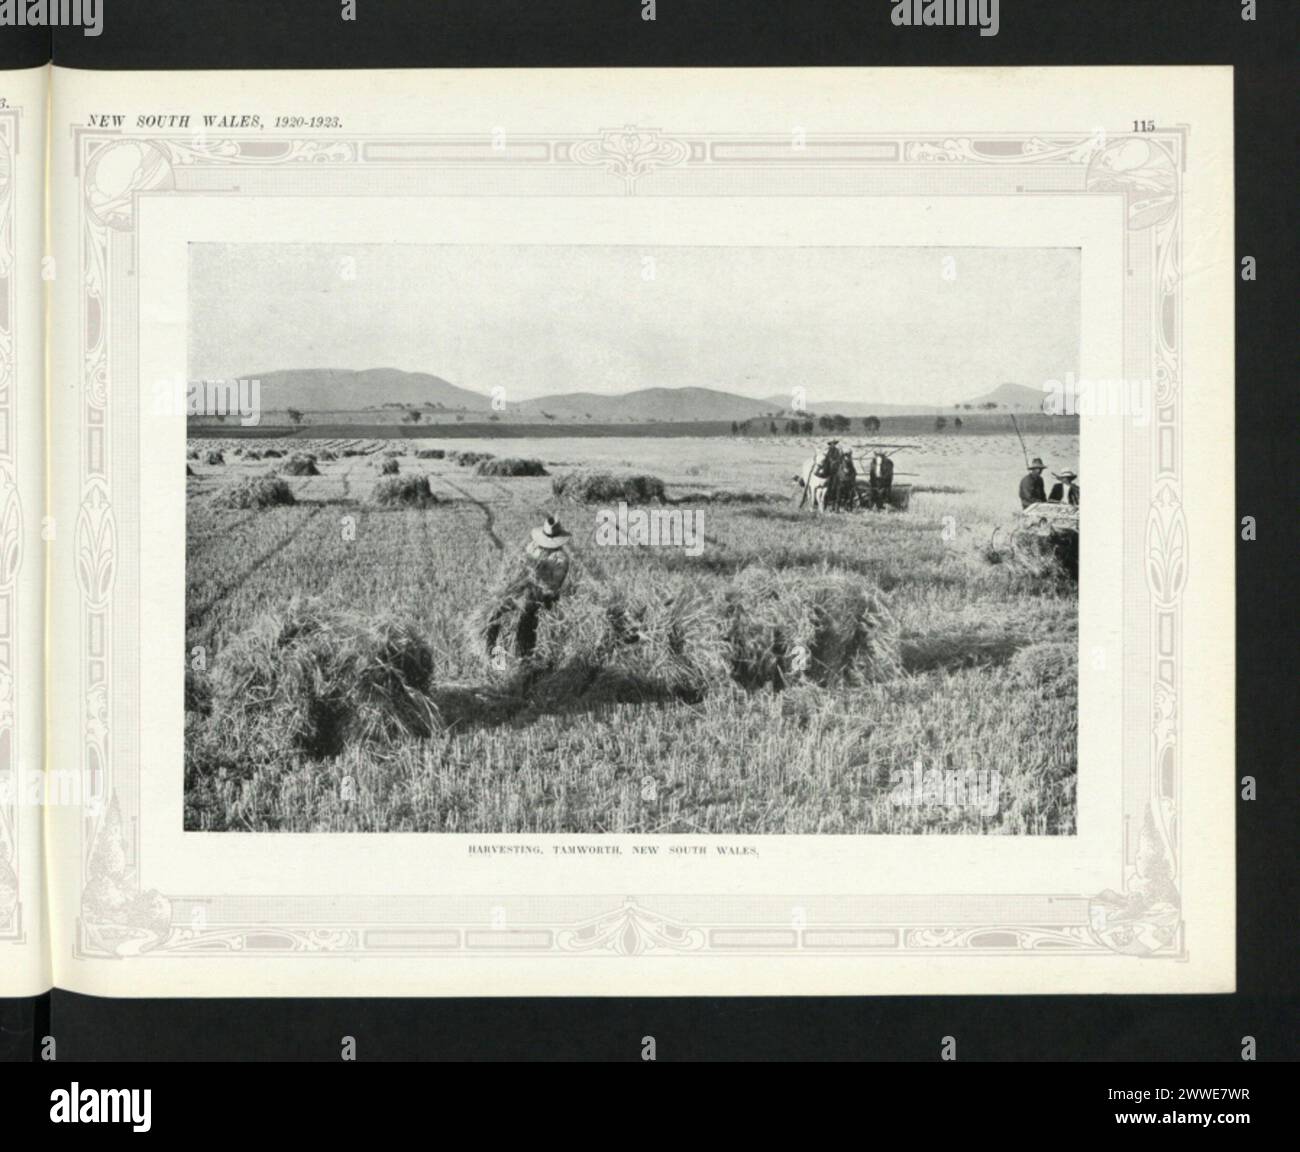 Description: Harvesting, Tamworth, New South Wales. Location: New South Wales, Tamworth, Australia Date: 1920 australia, australasia, oceania, australasiathroughalens Stock Photo